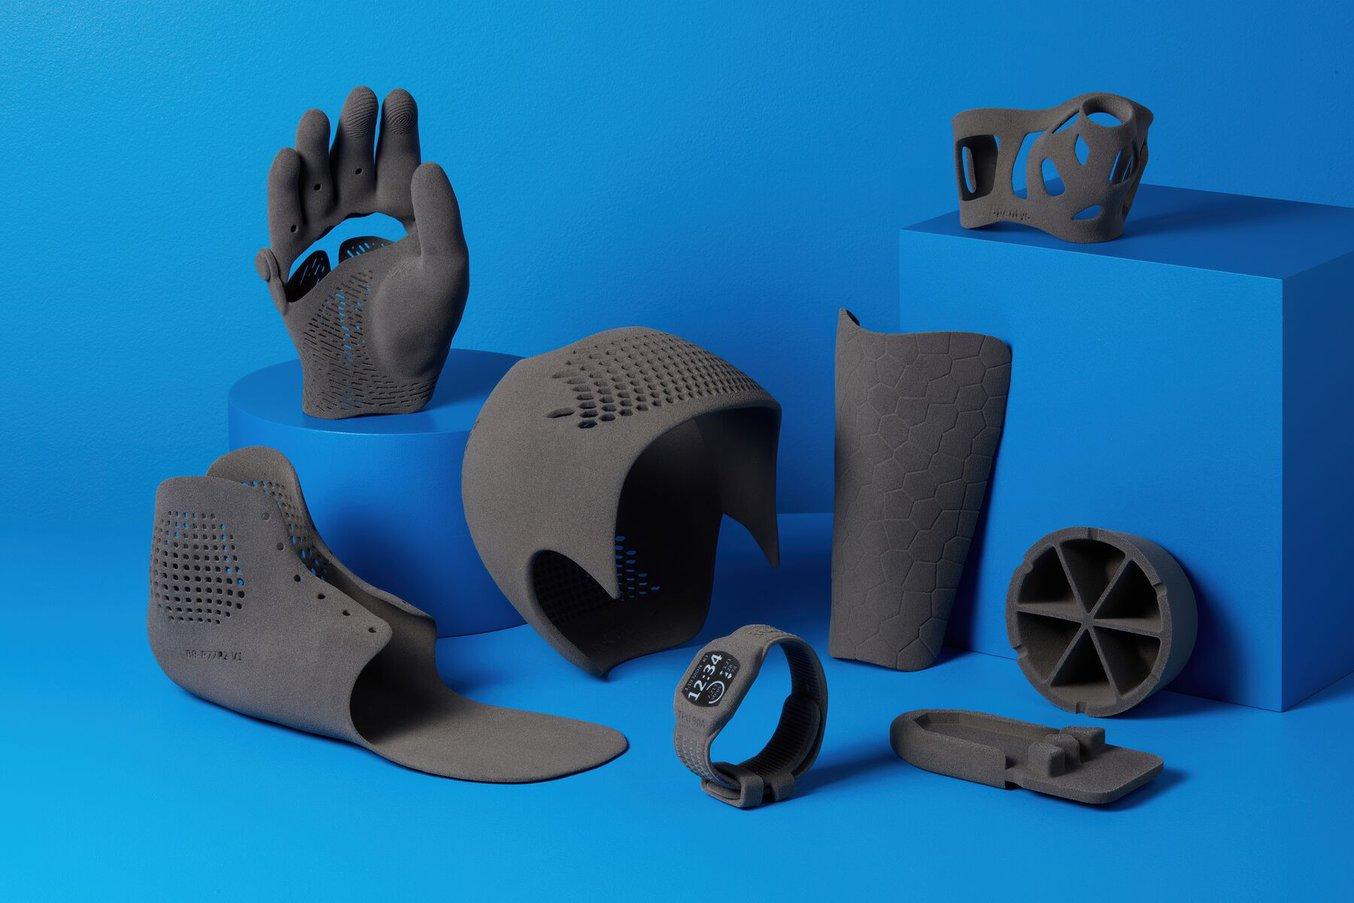 Foto acht verschiedener flexibler Medizinprodukte aus dem SLS-3D-Drucker